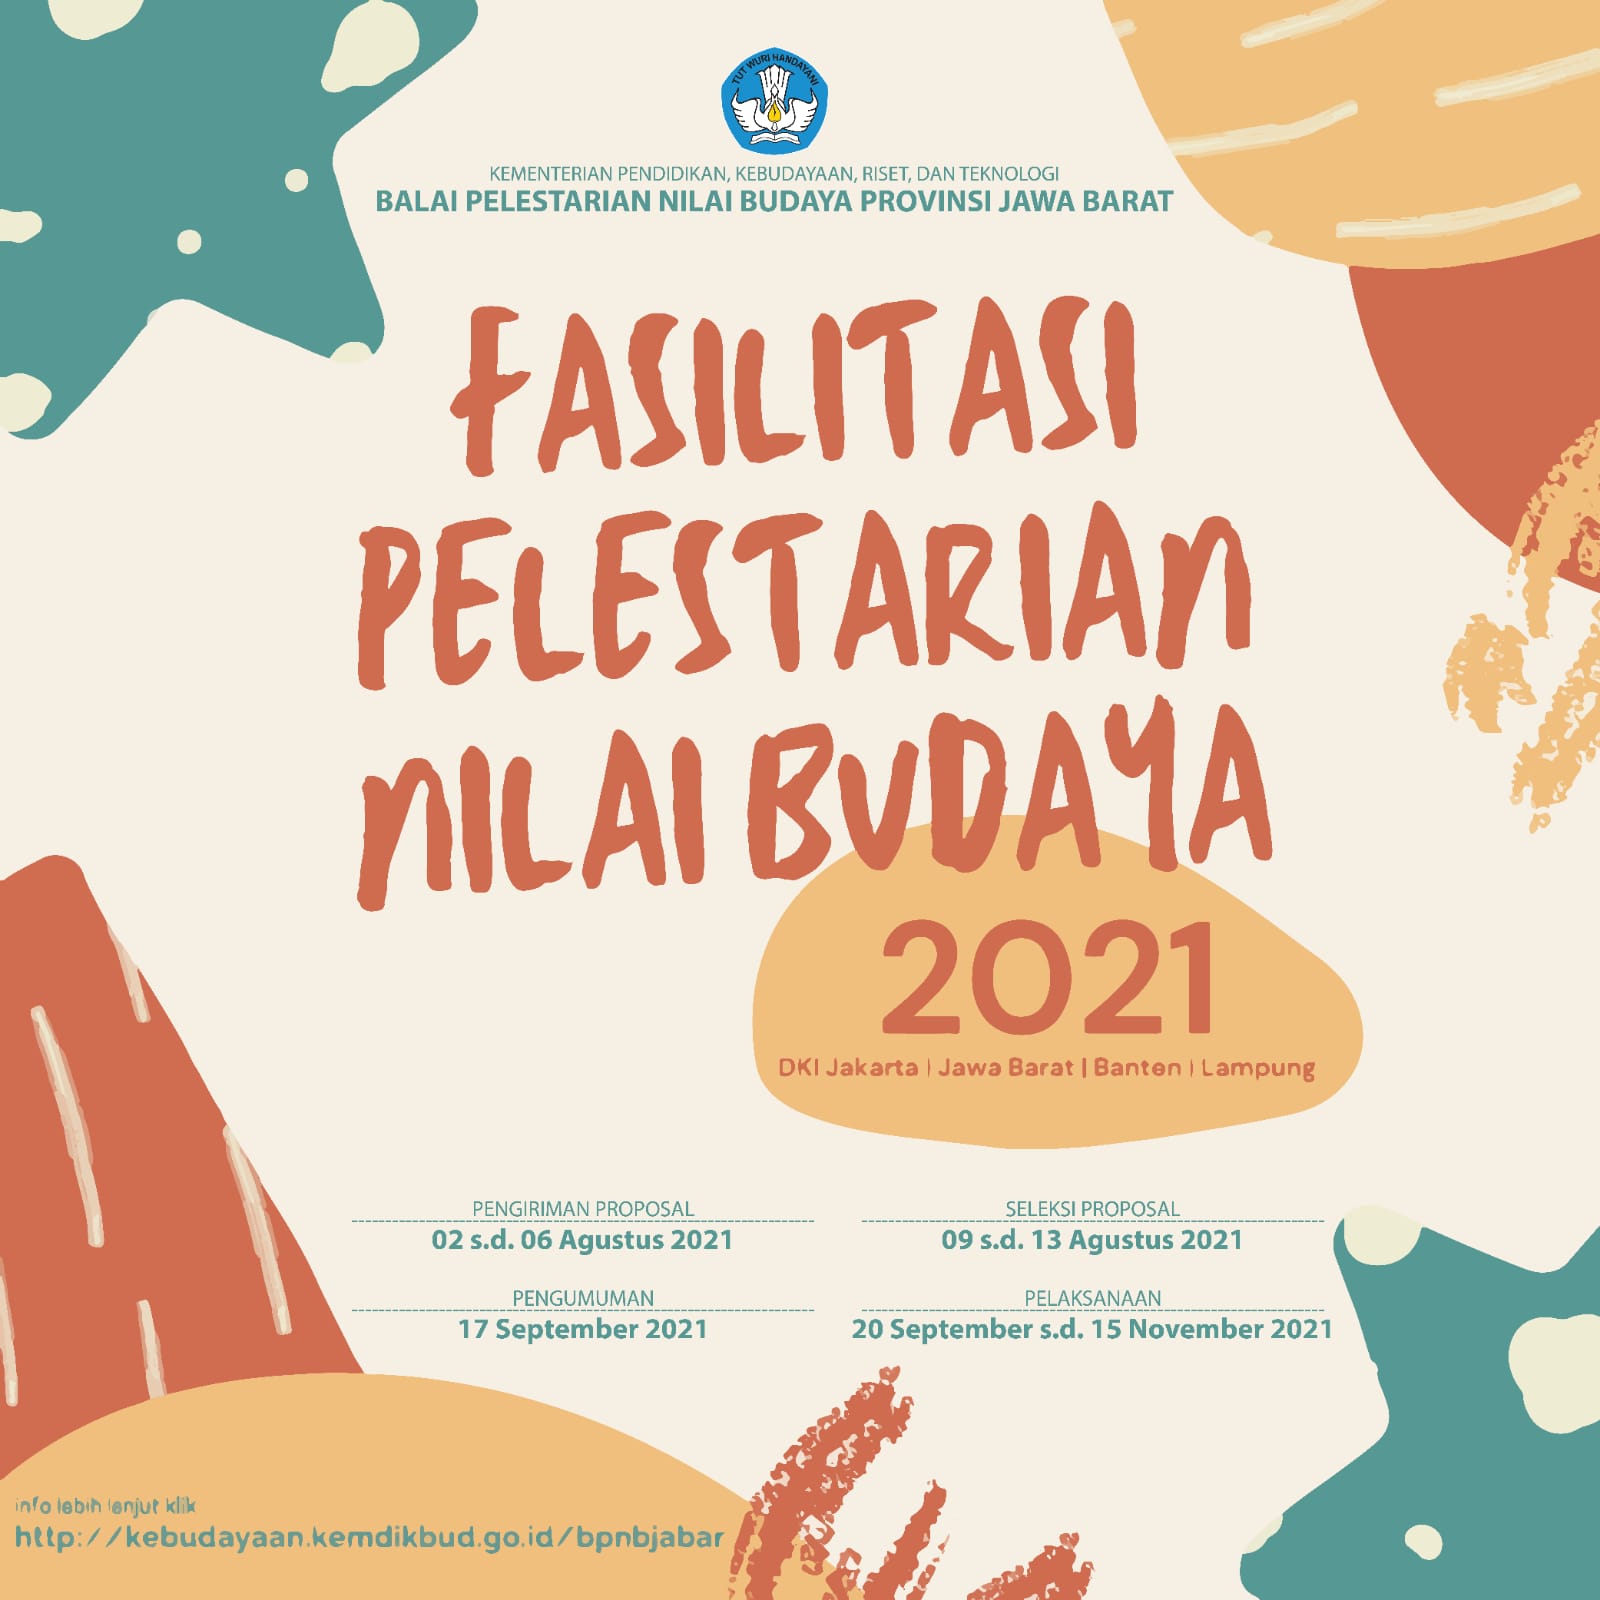 You are currently viewing Program Fasilitasi Pelestarian Nilai Budaya 2021